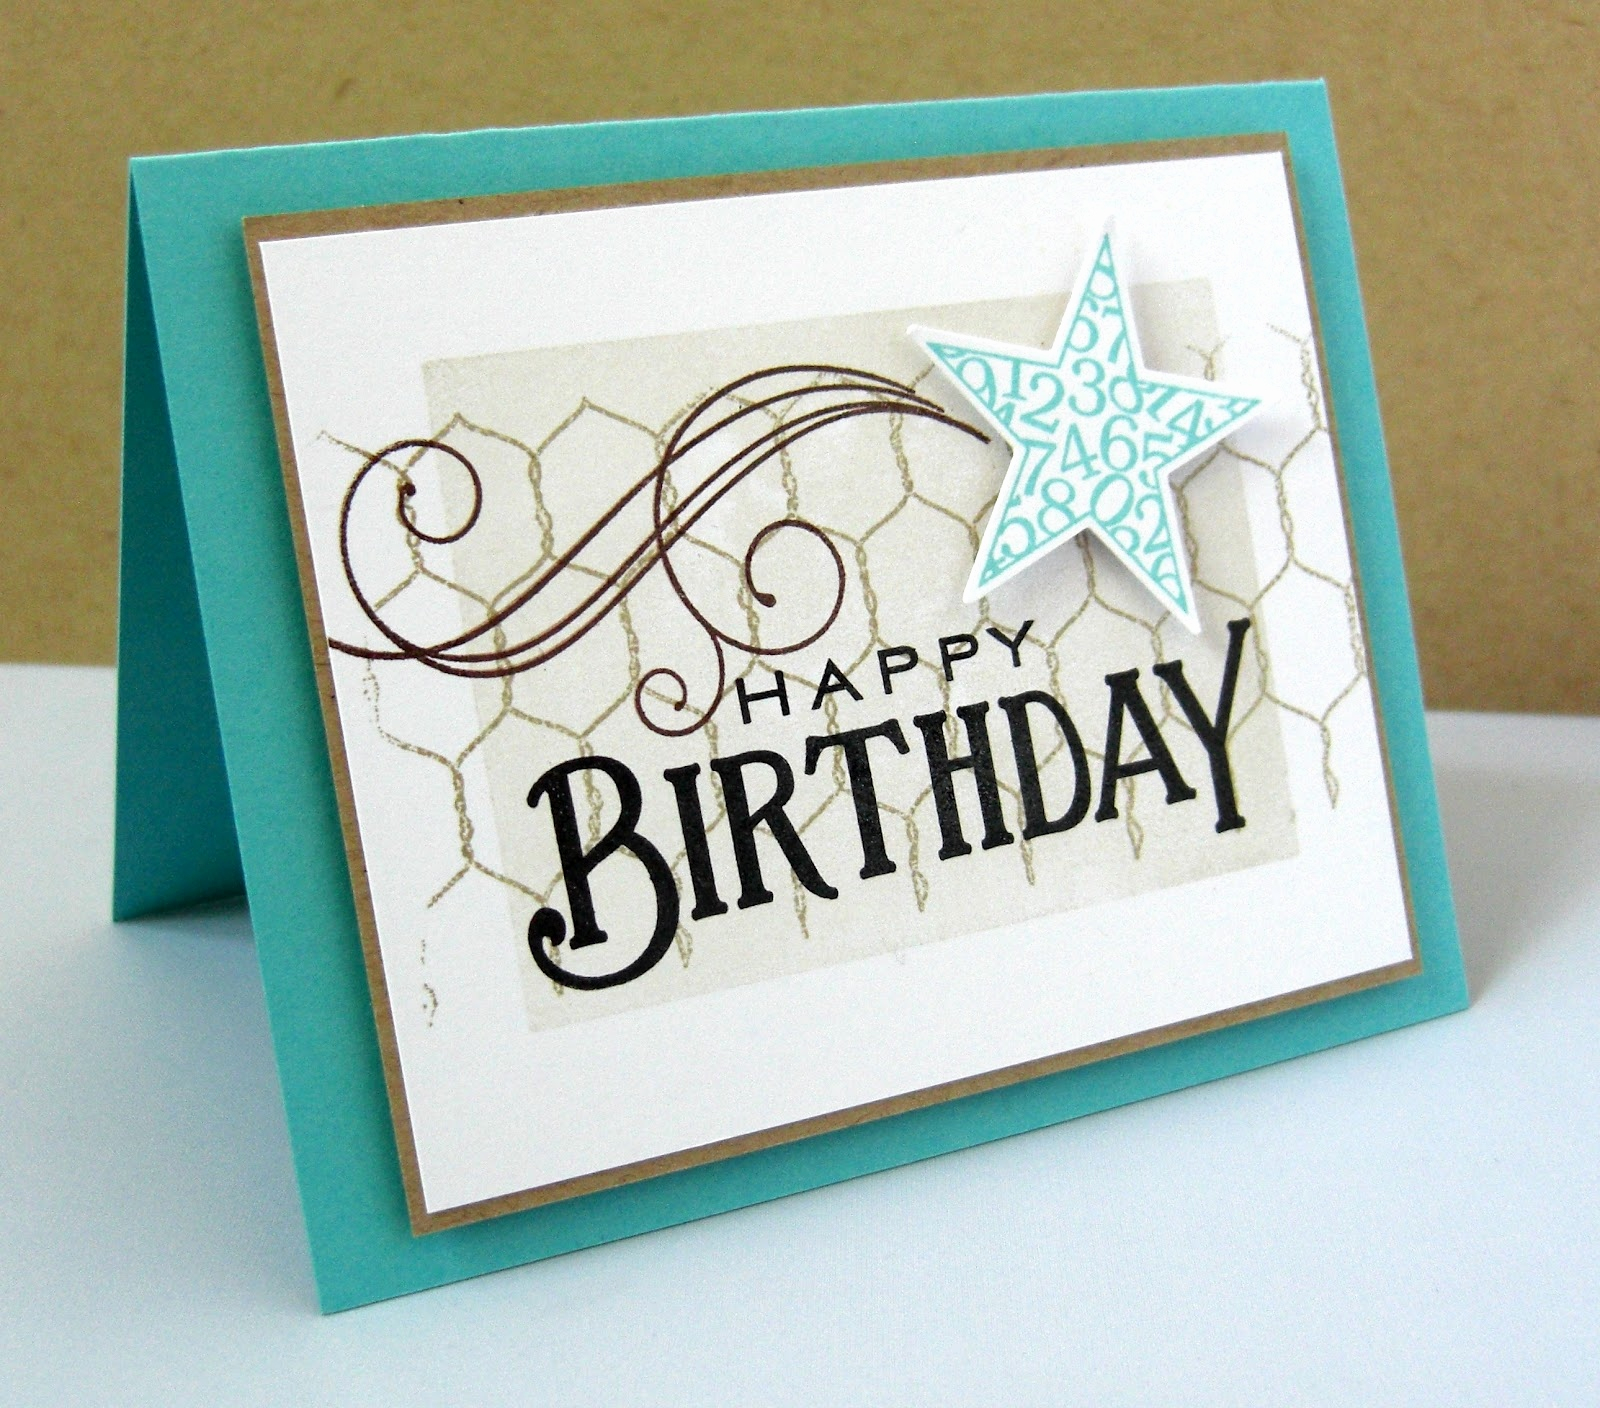 Birthday Card Ideas For Men Birthday Card Ideas For Men Unique Card Design Ideas For Birthdays